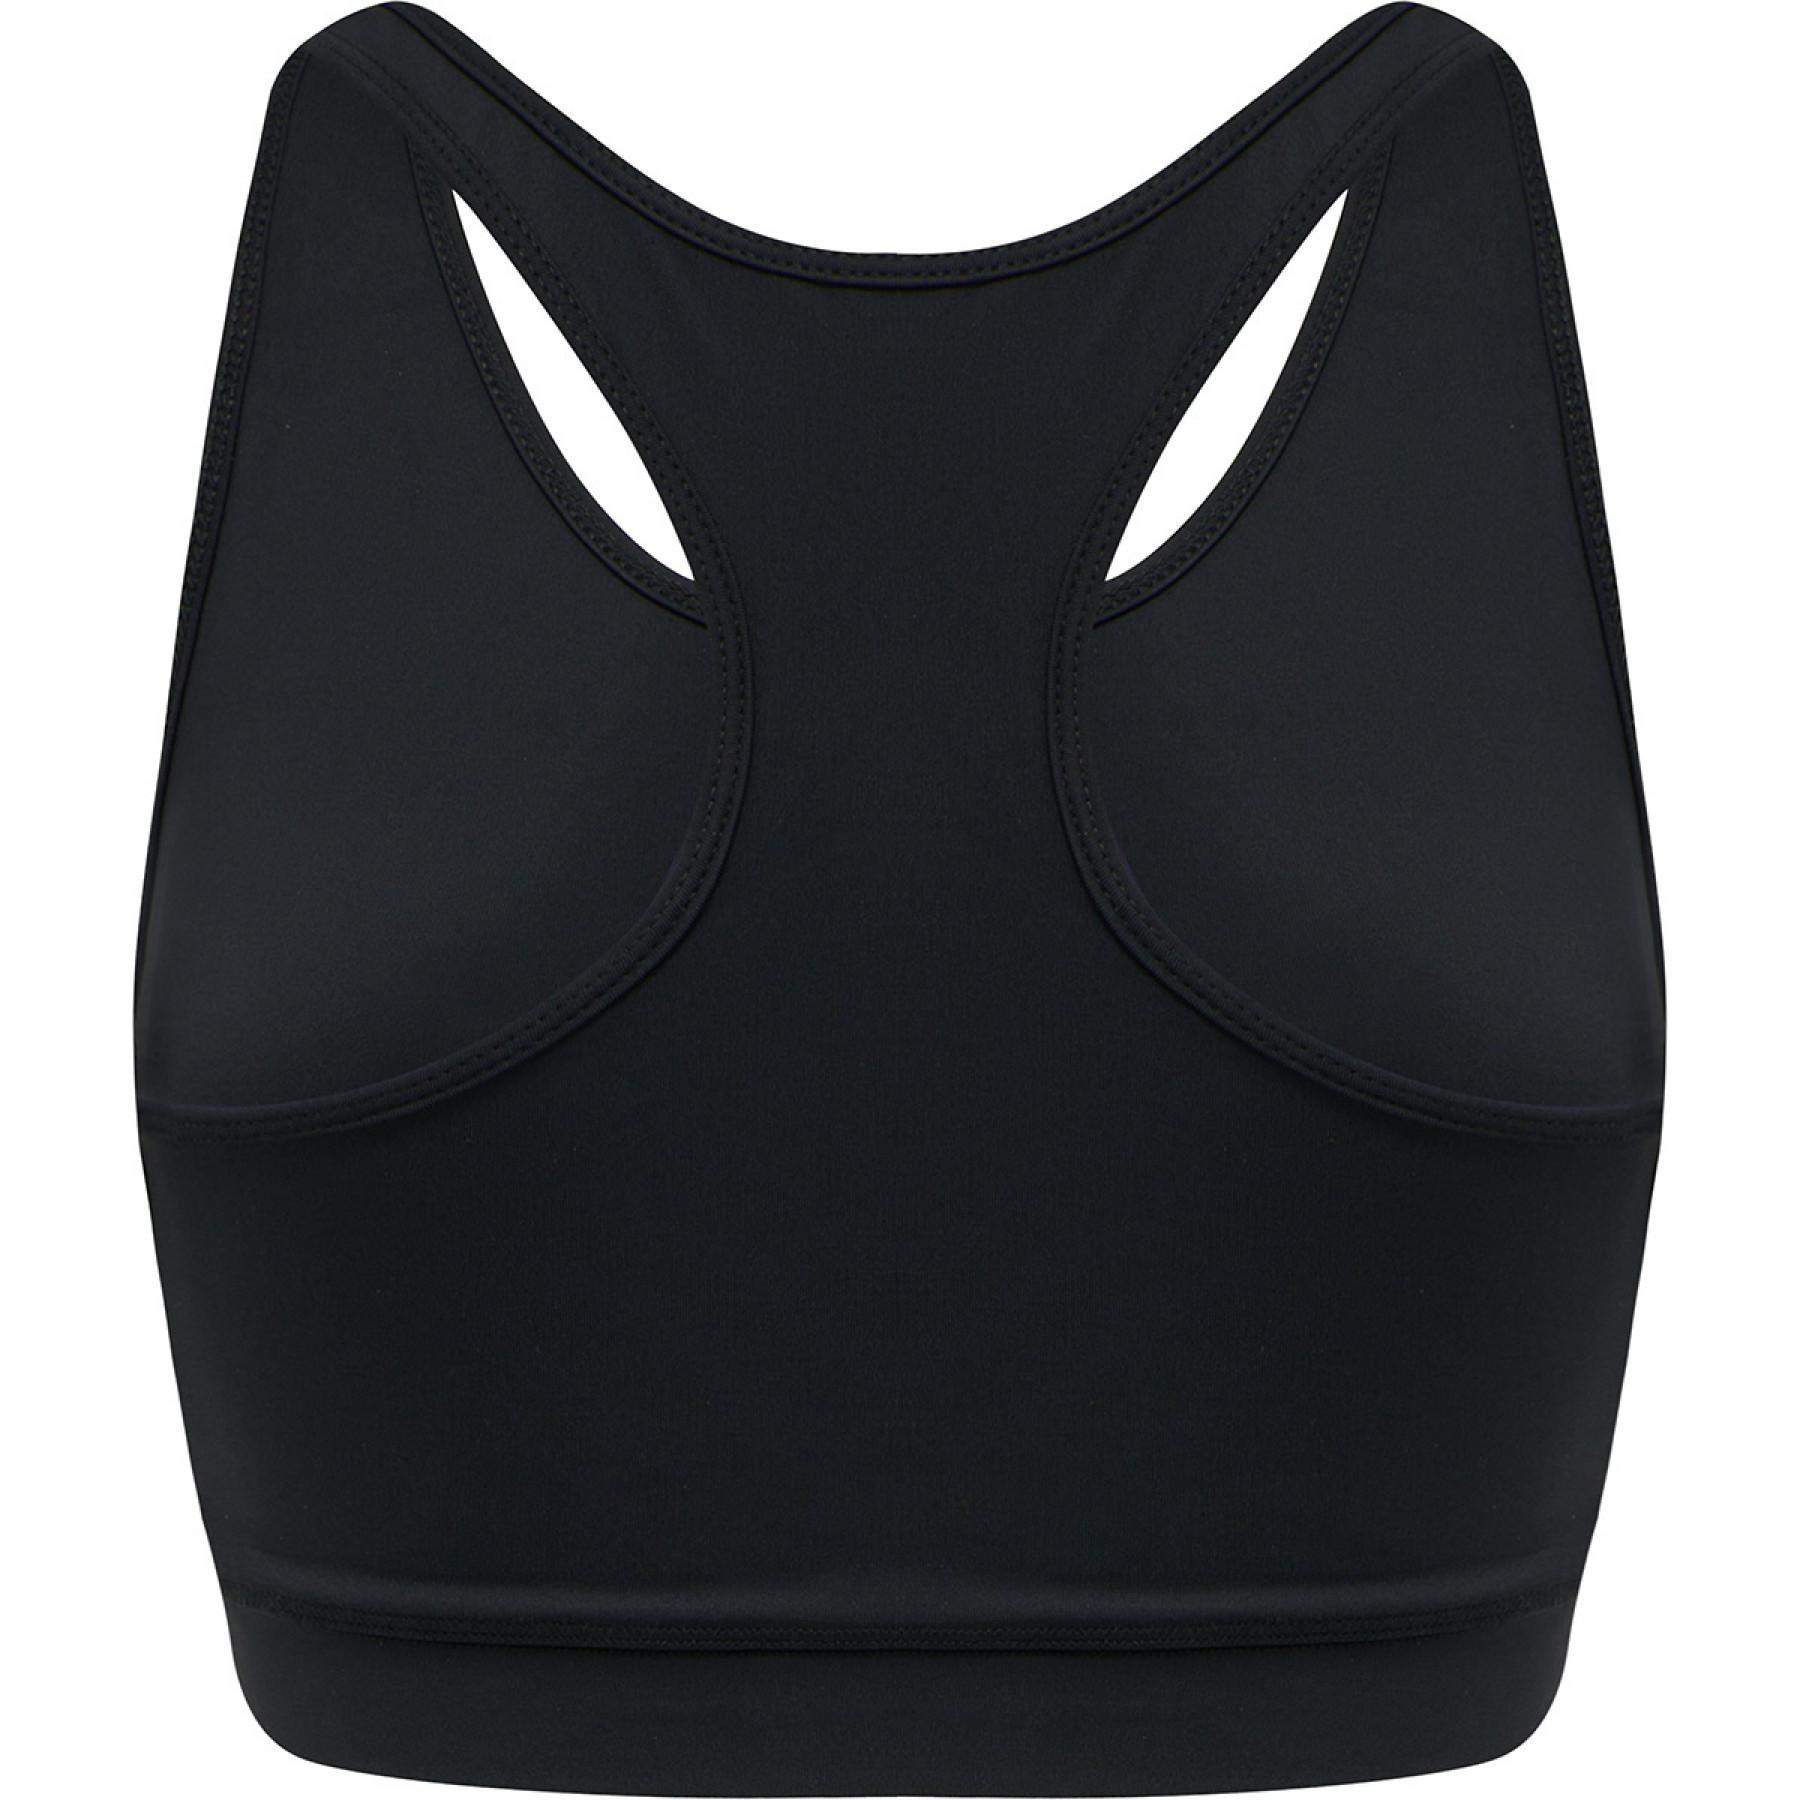 Women's bra Newline core athletic